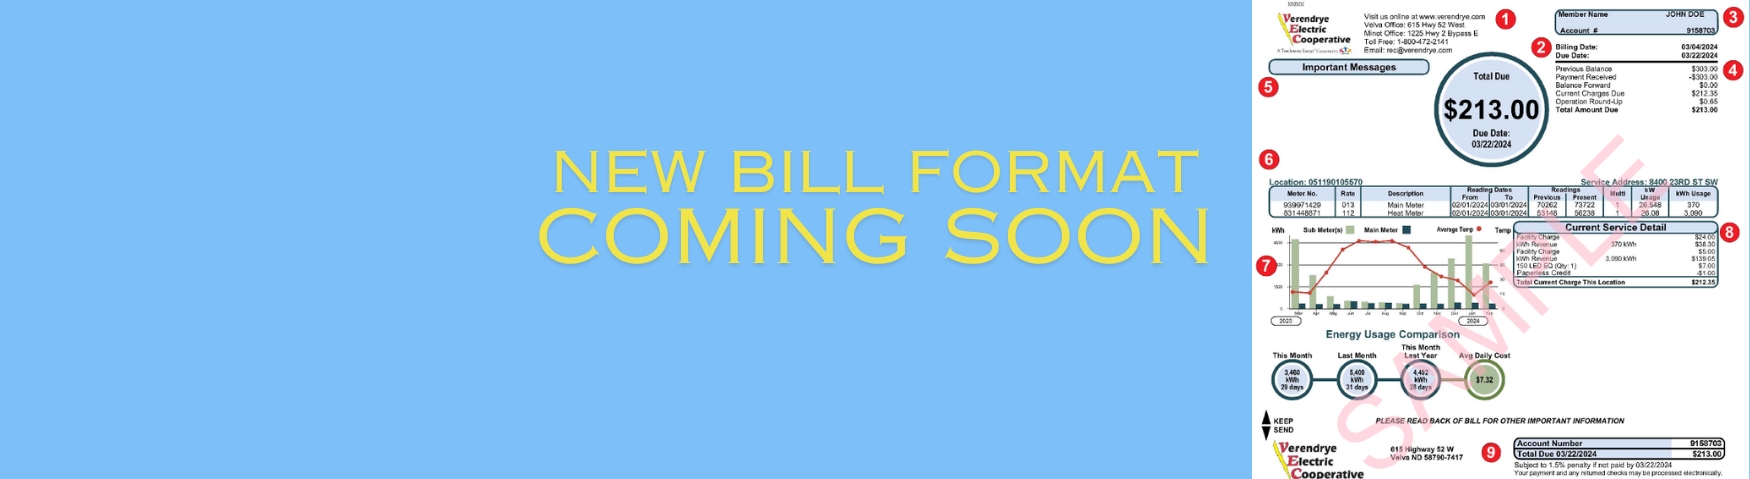 New Bill coming